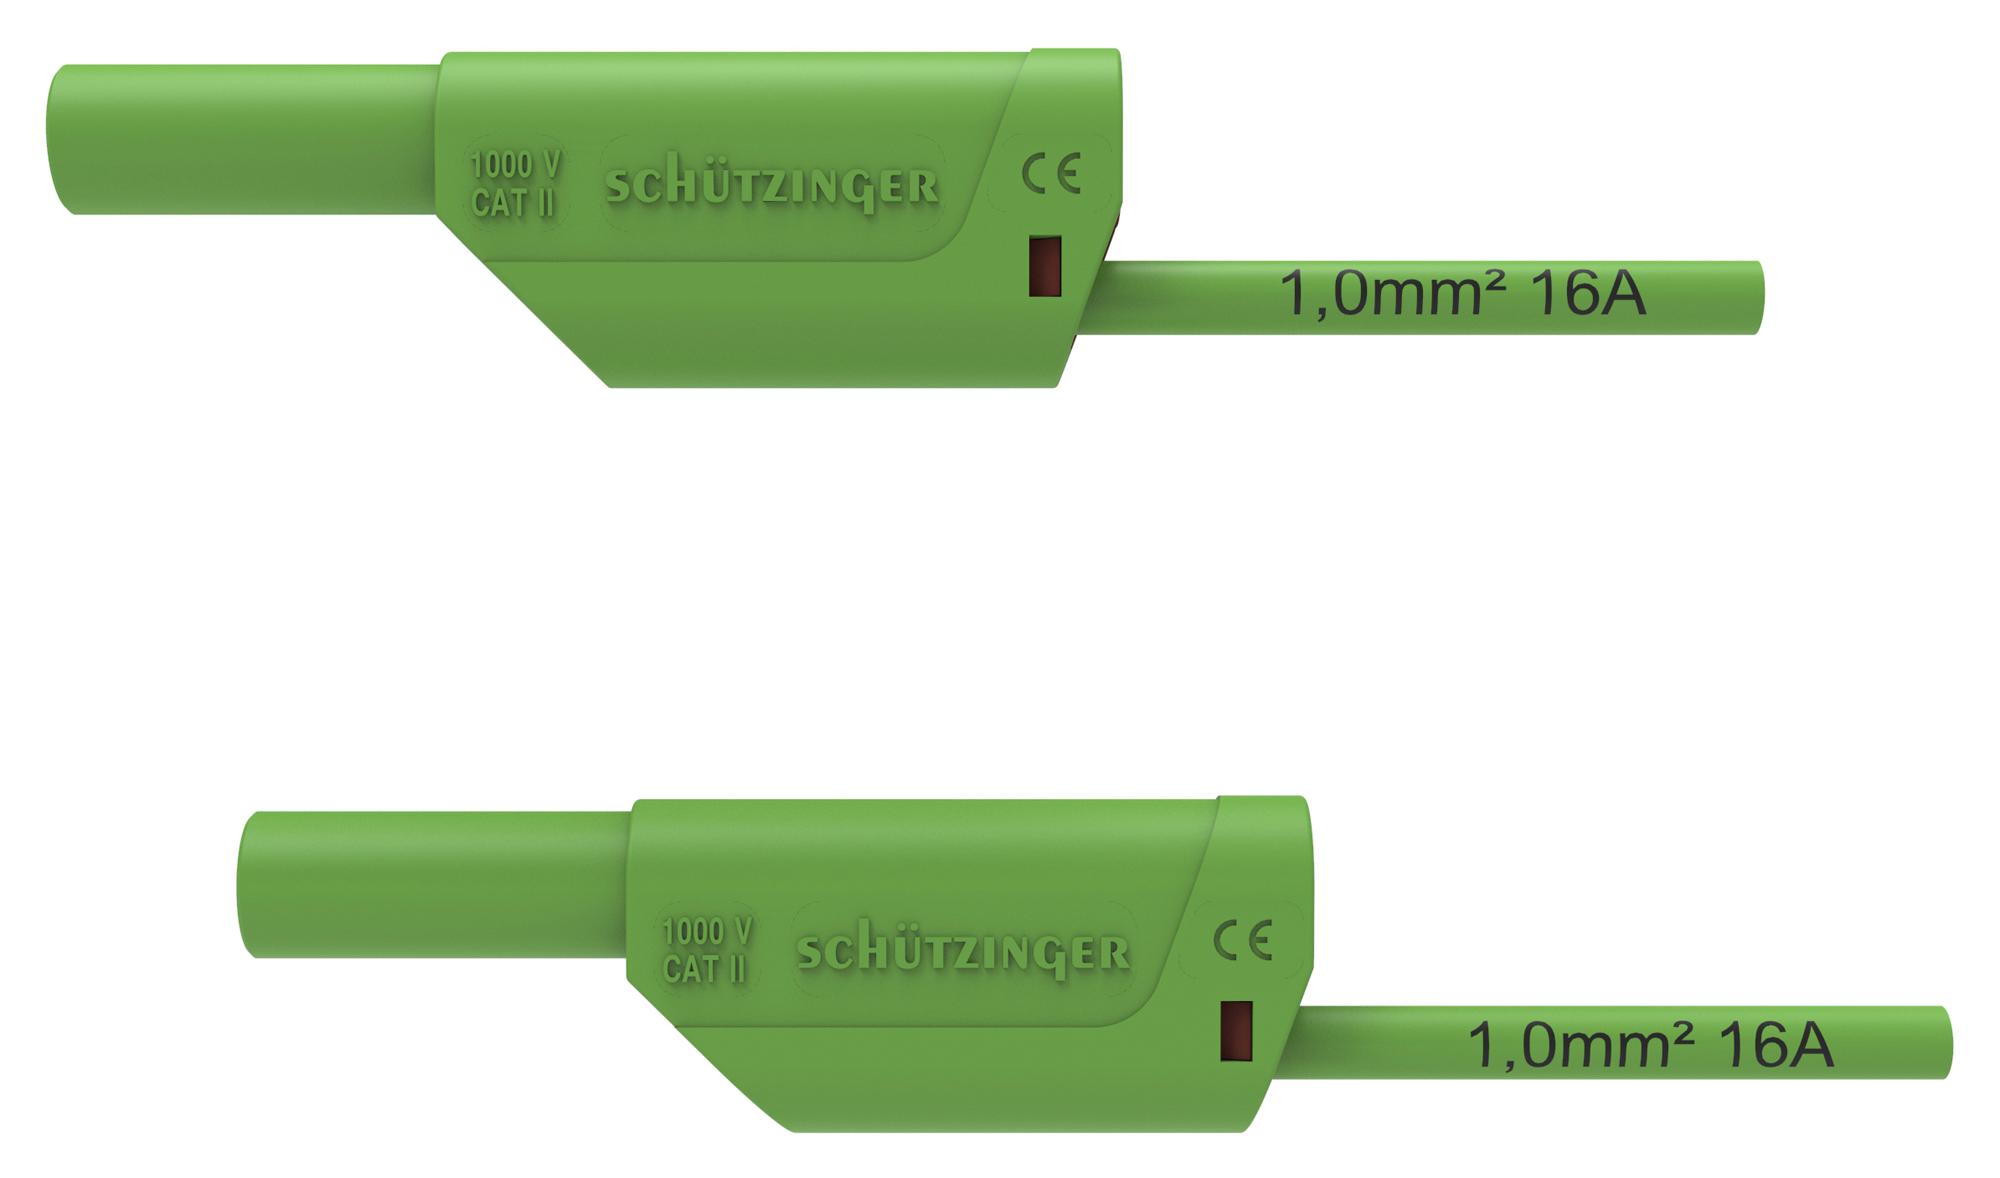 Schutzinger Di Vsfk 8500 / 1 / 50 / Gn 4mm Banana Plug-Sq, Shrouded, Gr, 500mm